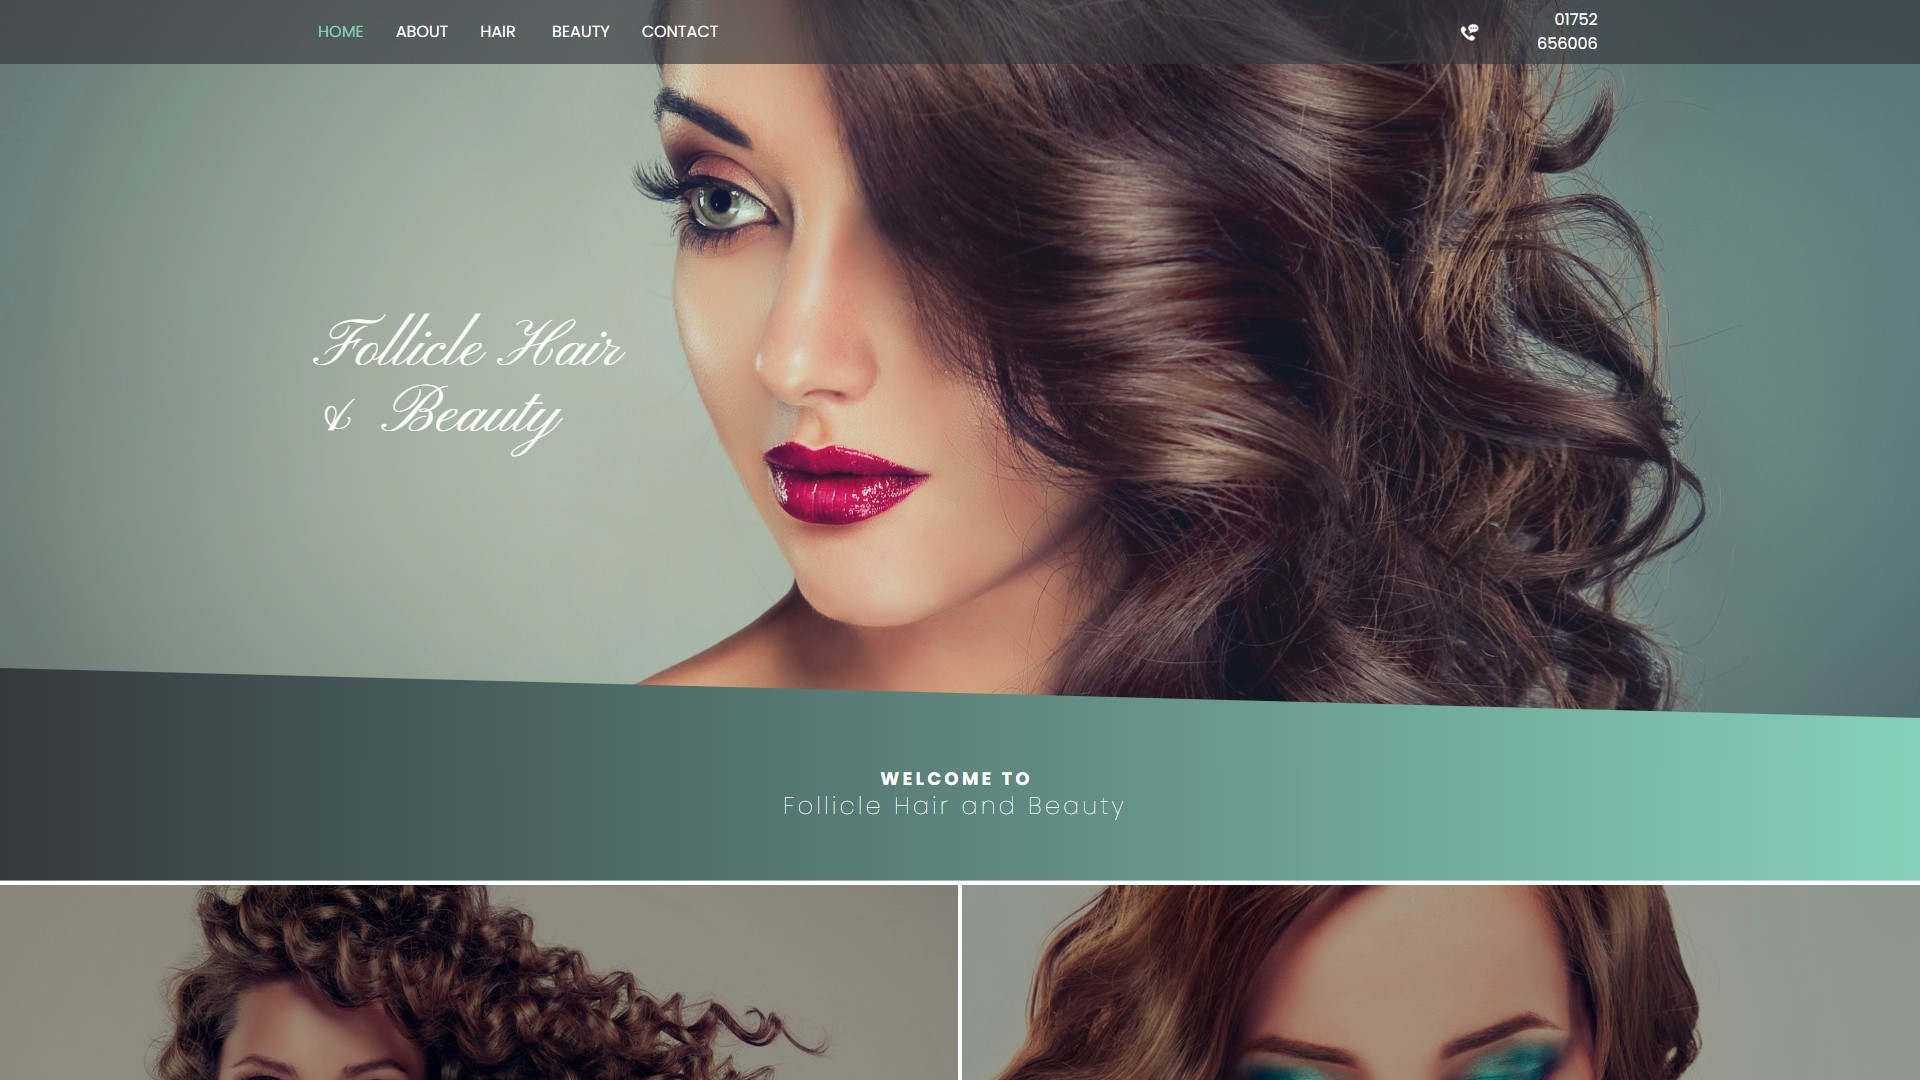 Follicle Hair & Beauty website design